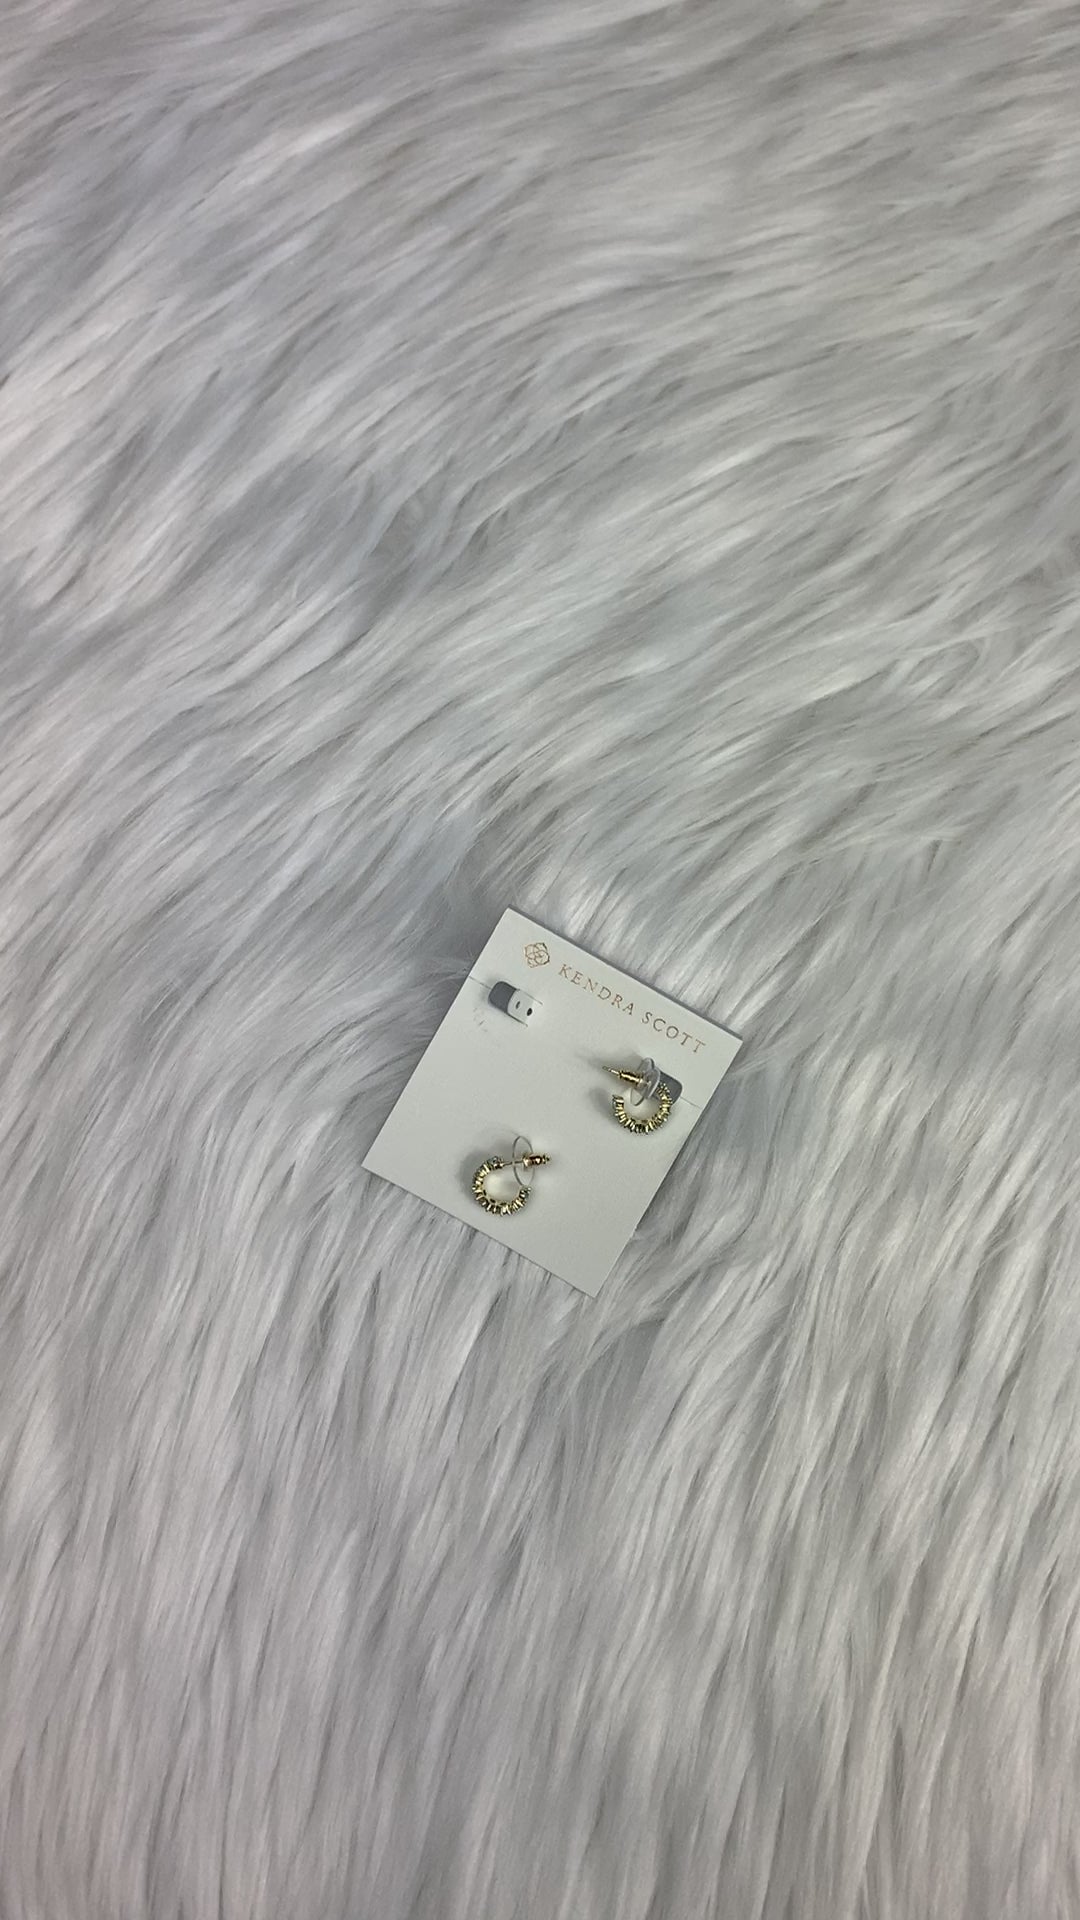 Kendra Scott Cailin Huggie Hoop Earrings in Aqua Crystal and Gold Plated